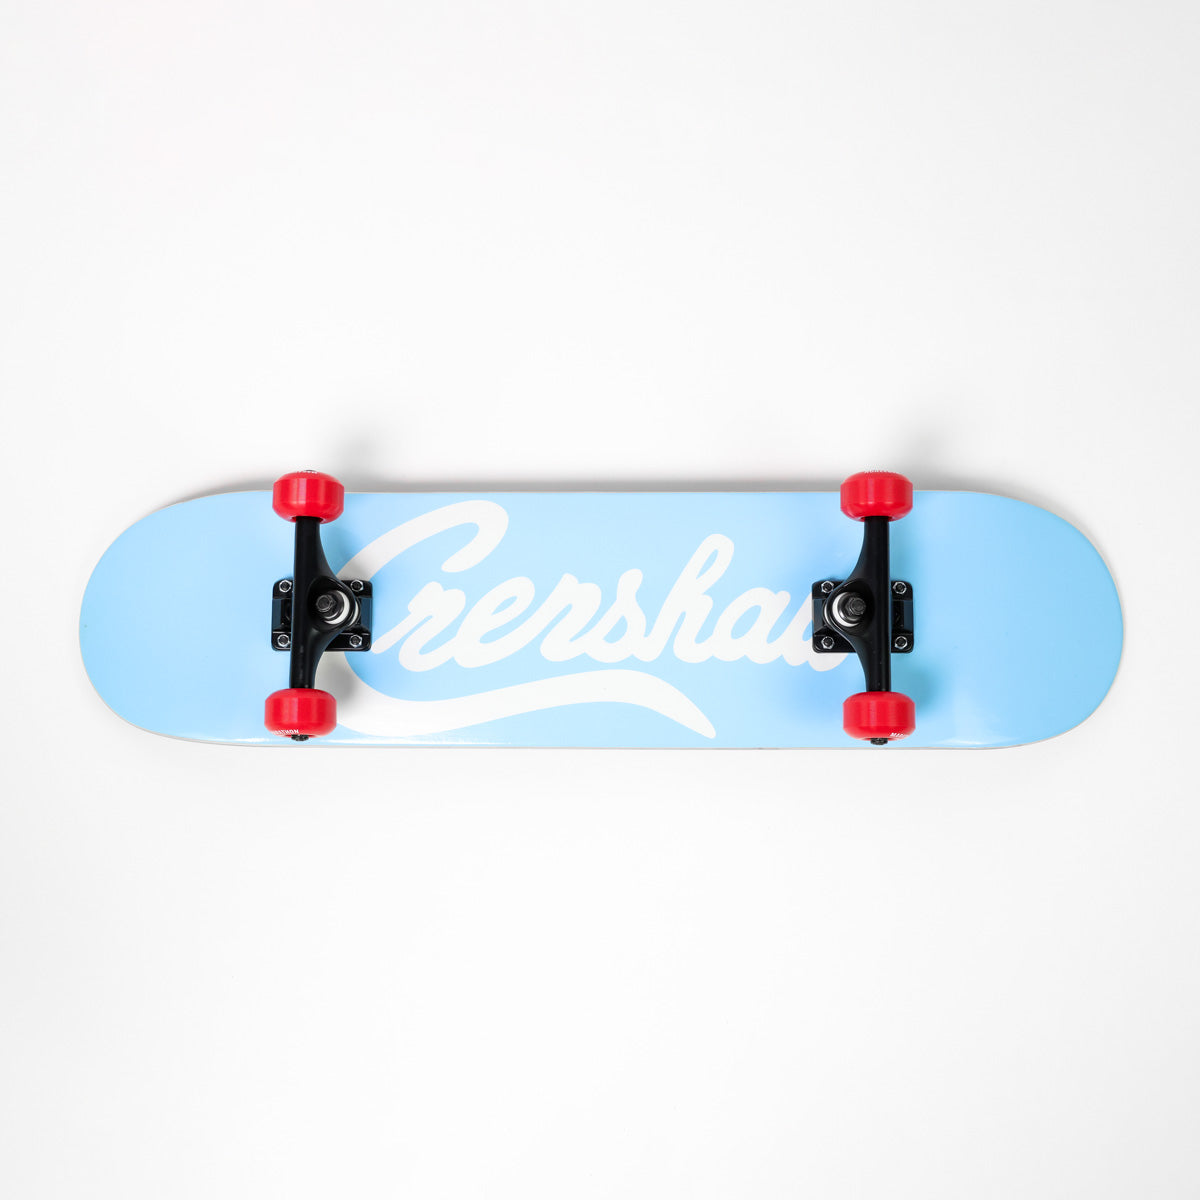 Limited Edition Crenshaw Skateboard - Light Blue/White - Bottom